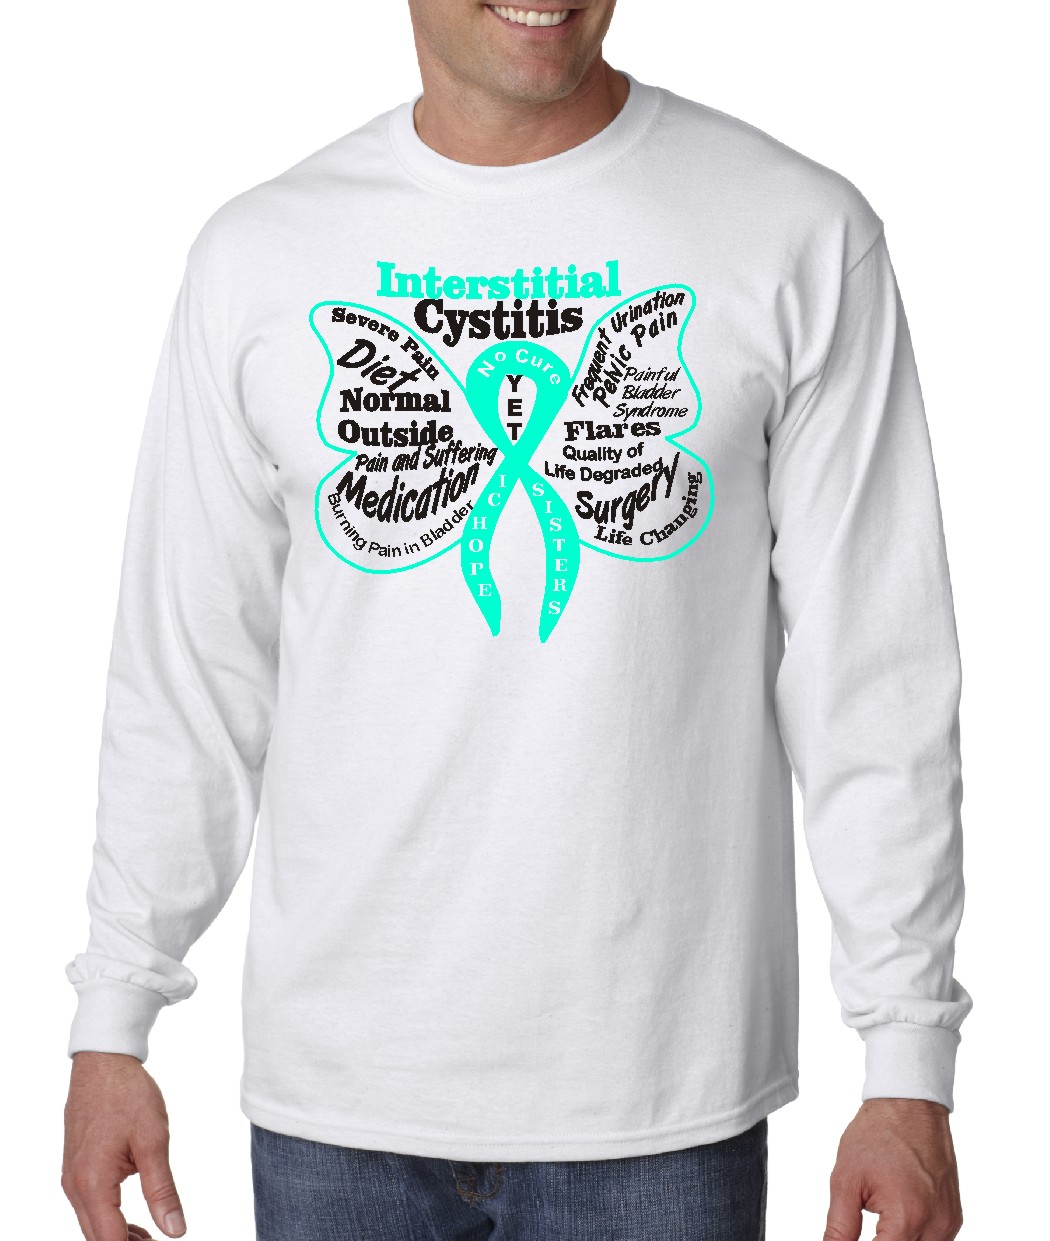 Interstitial Cystitis Awareness long sleeve shirt - no glitterflake